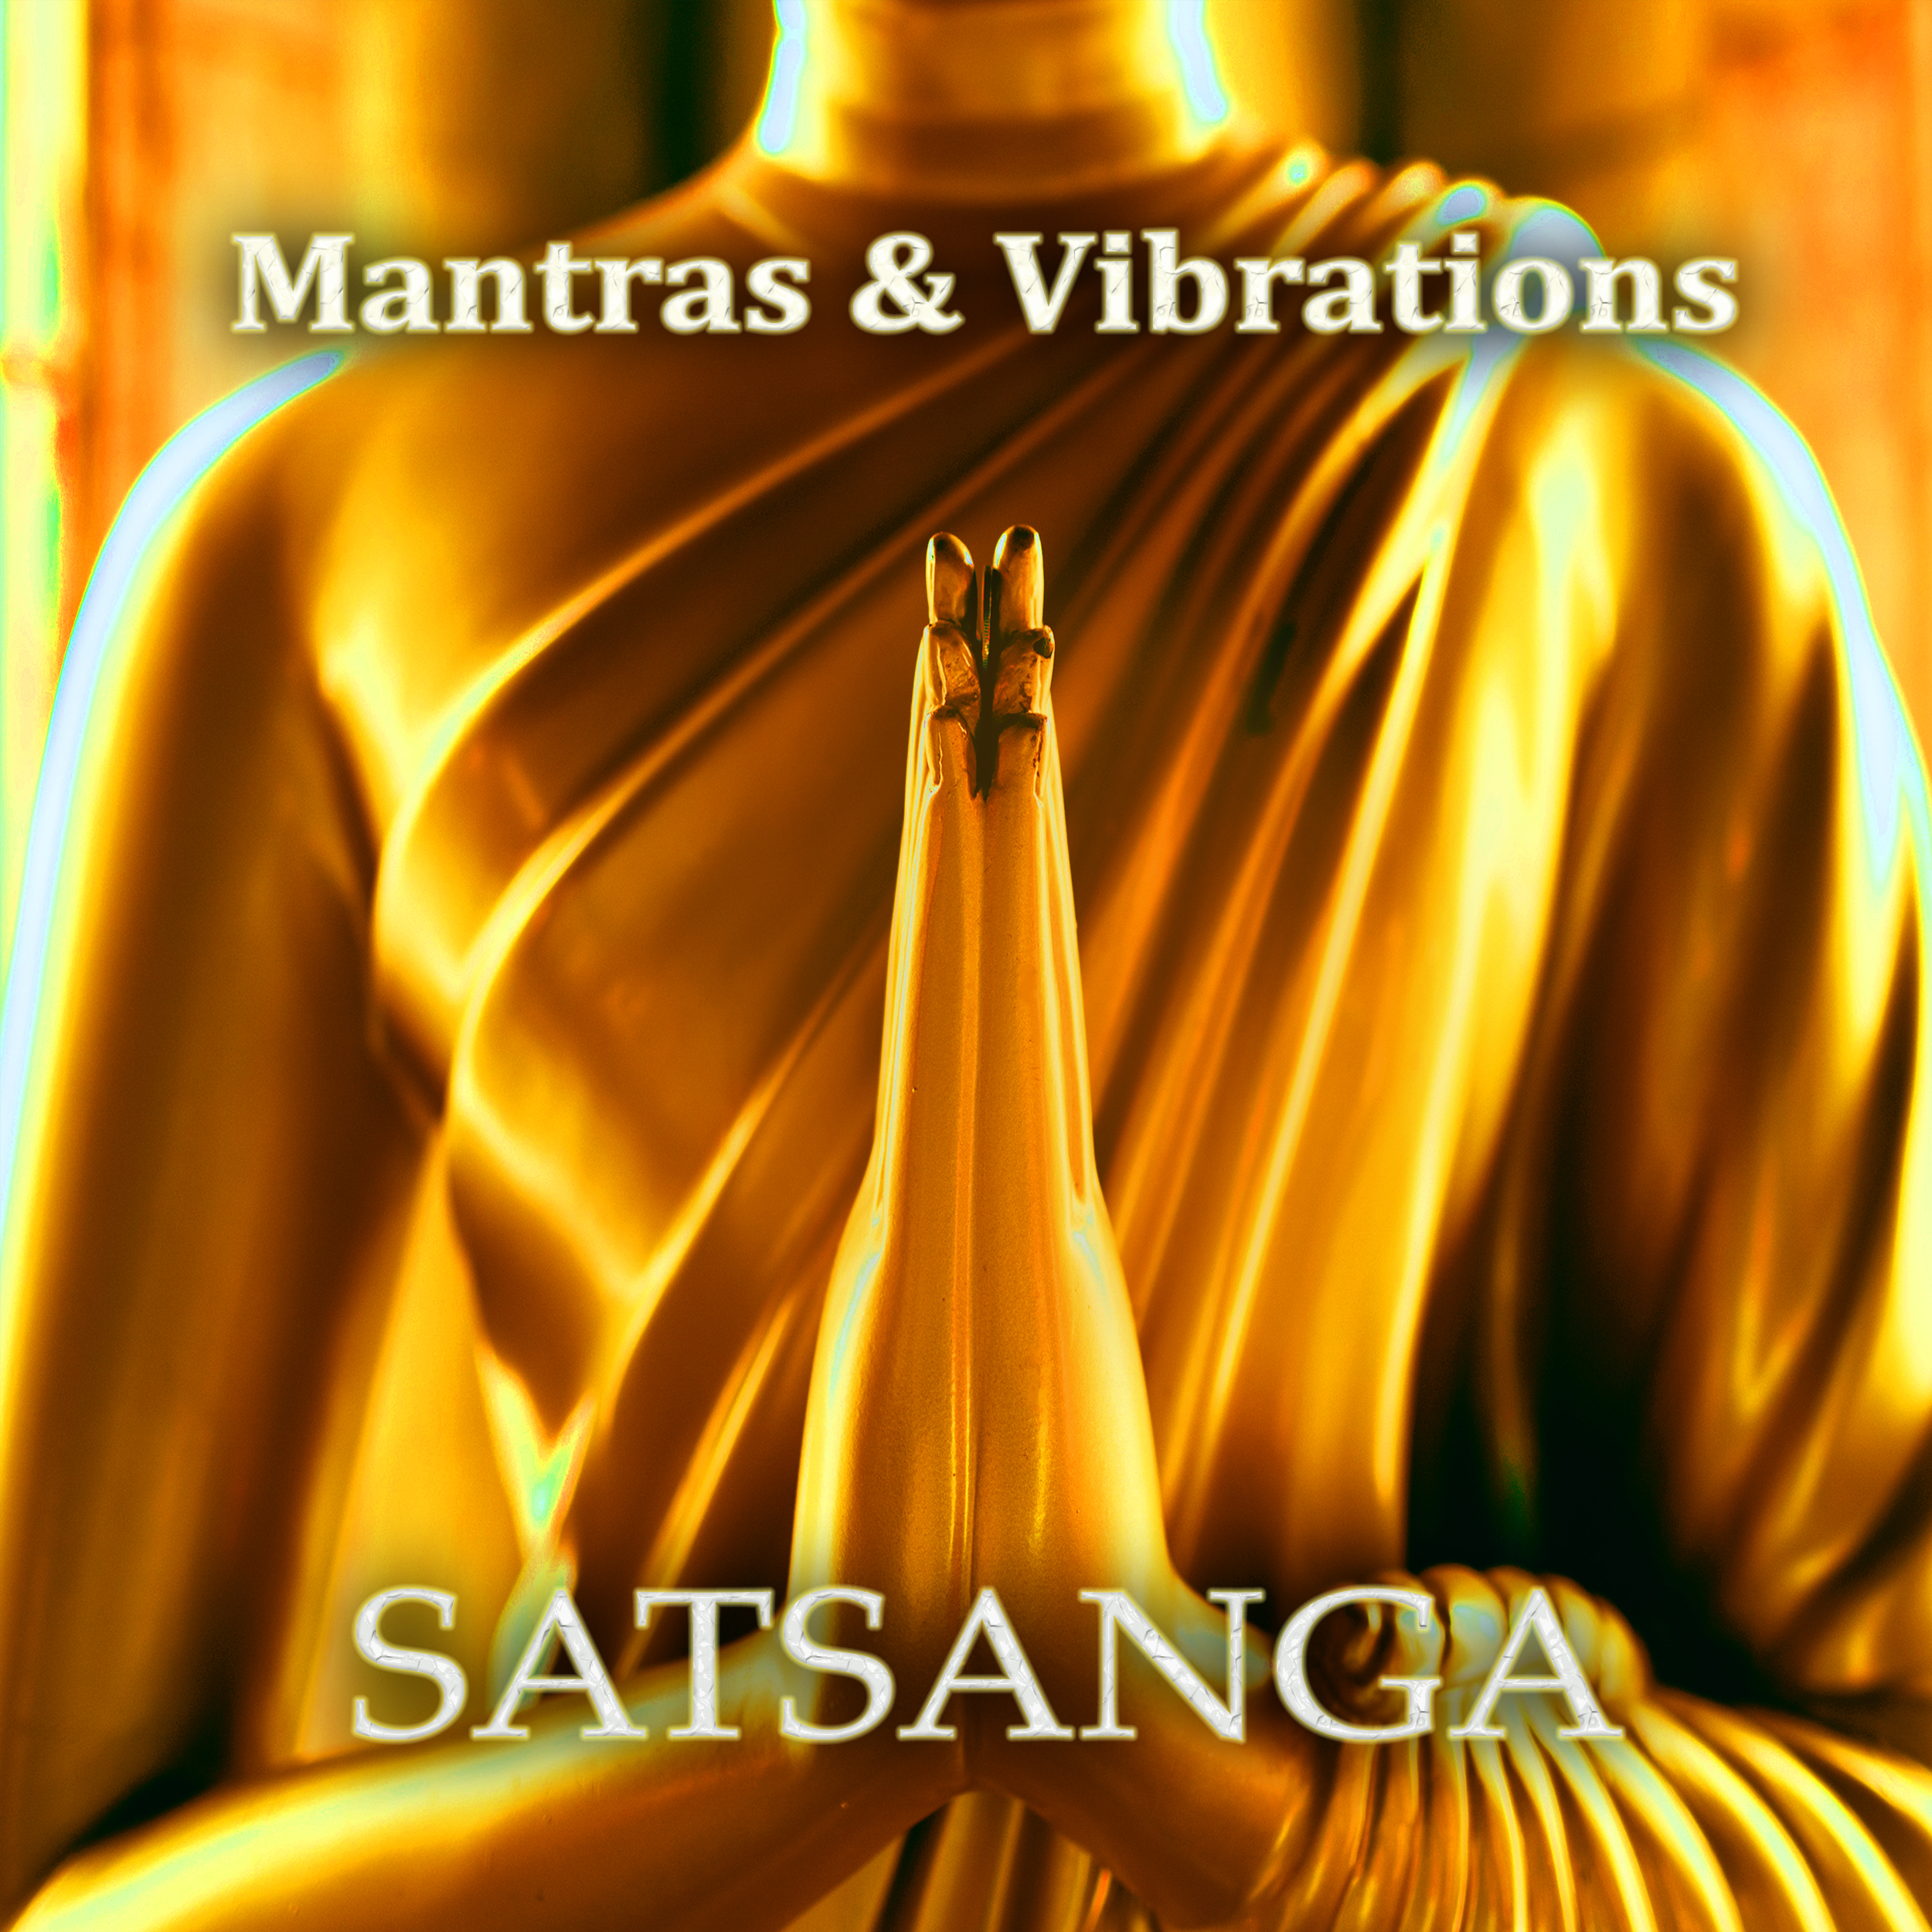 Satsanga (Album cover)